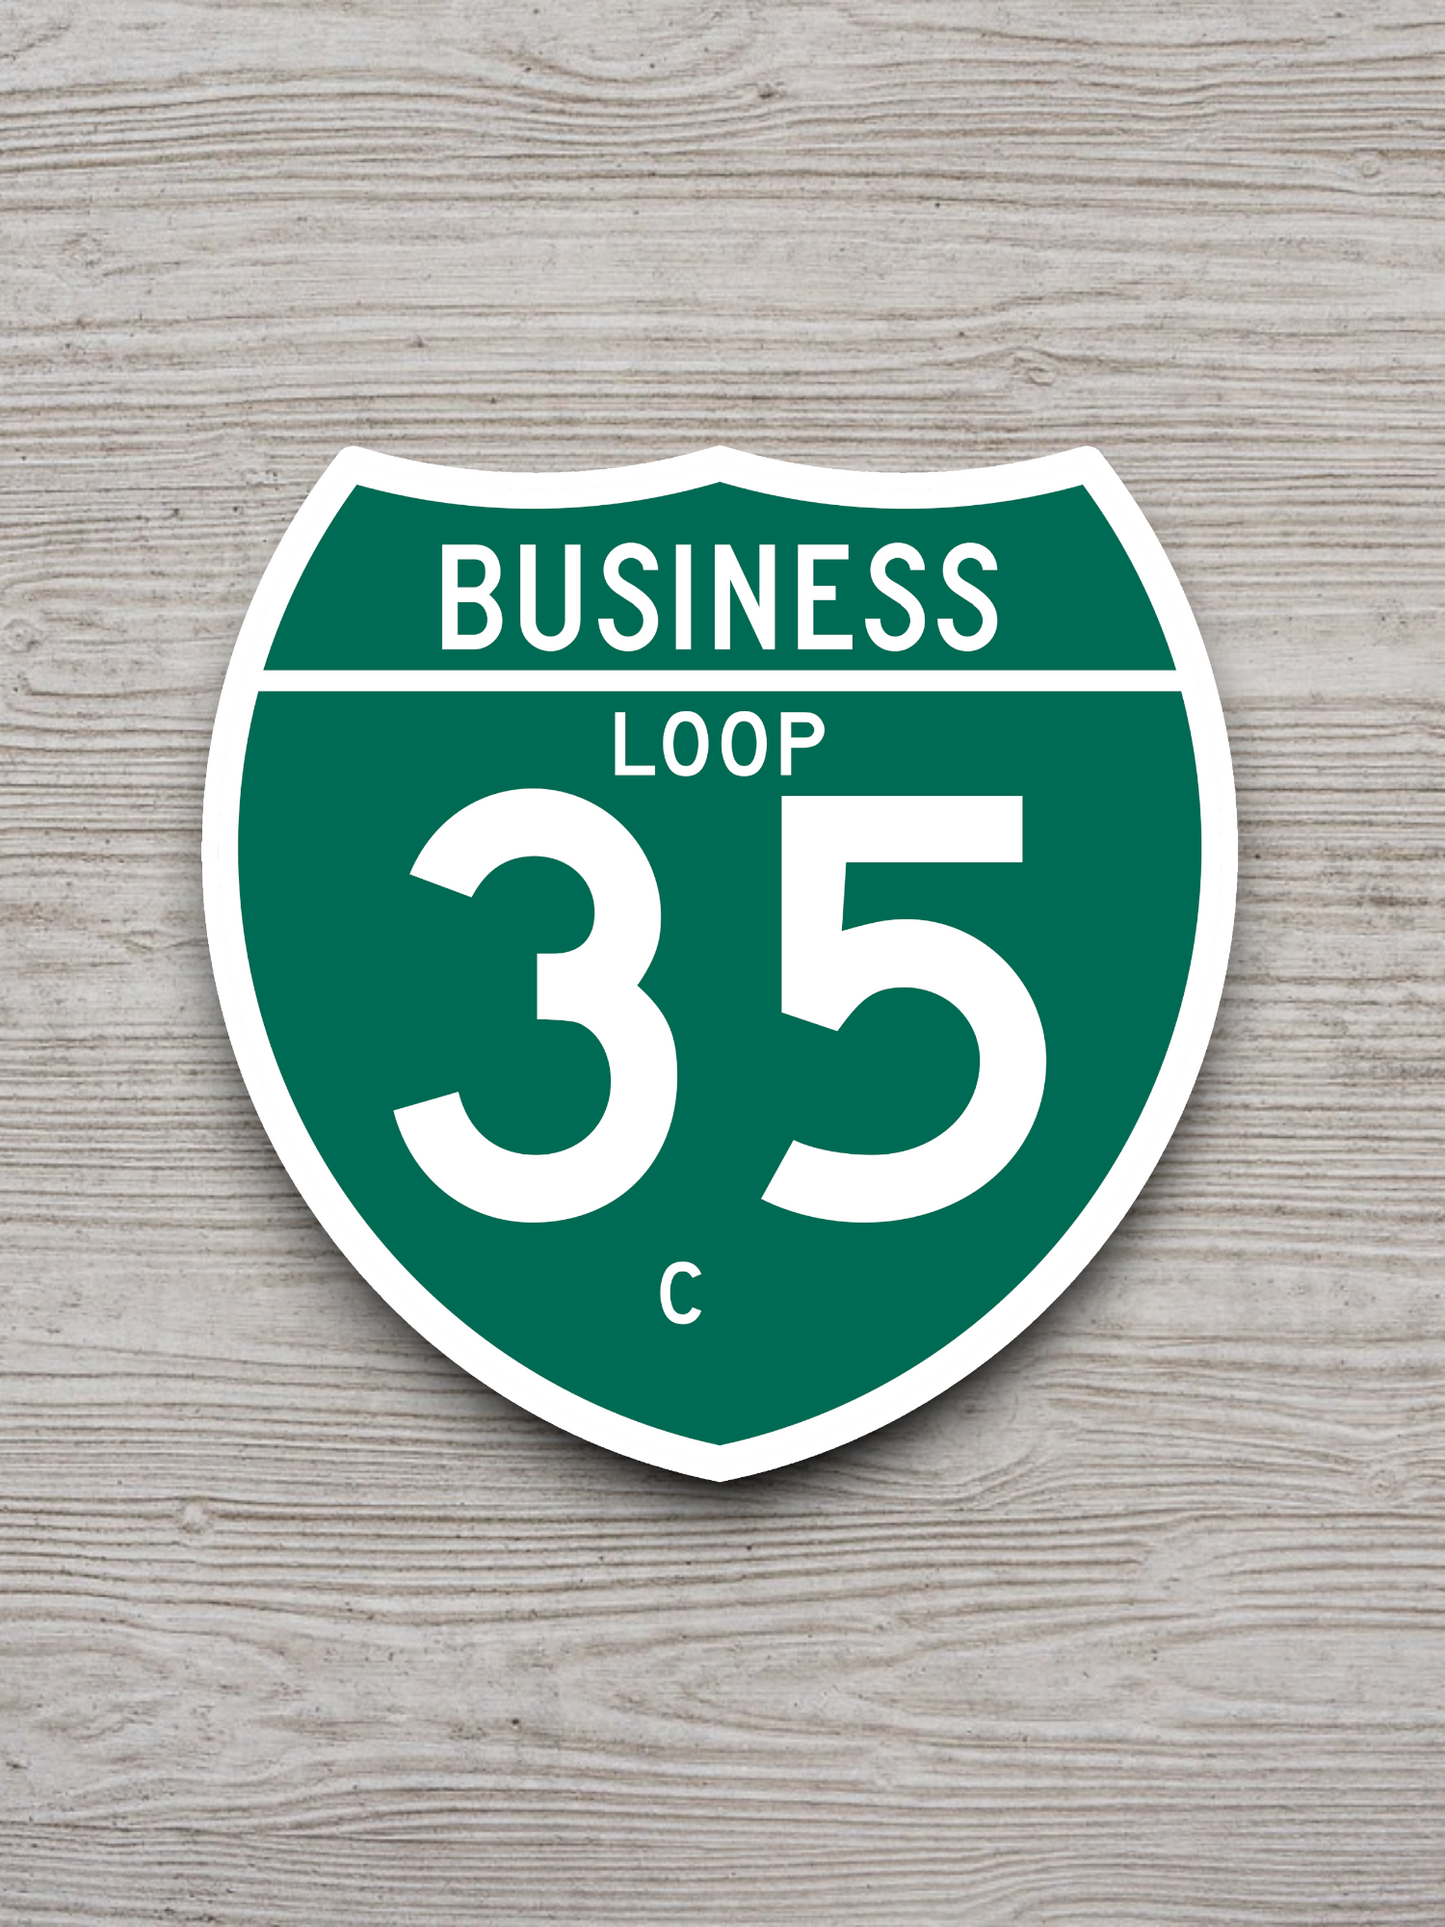 Business Spur Interstate 35-C Texas Road Sign Sticker